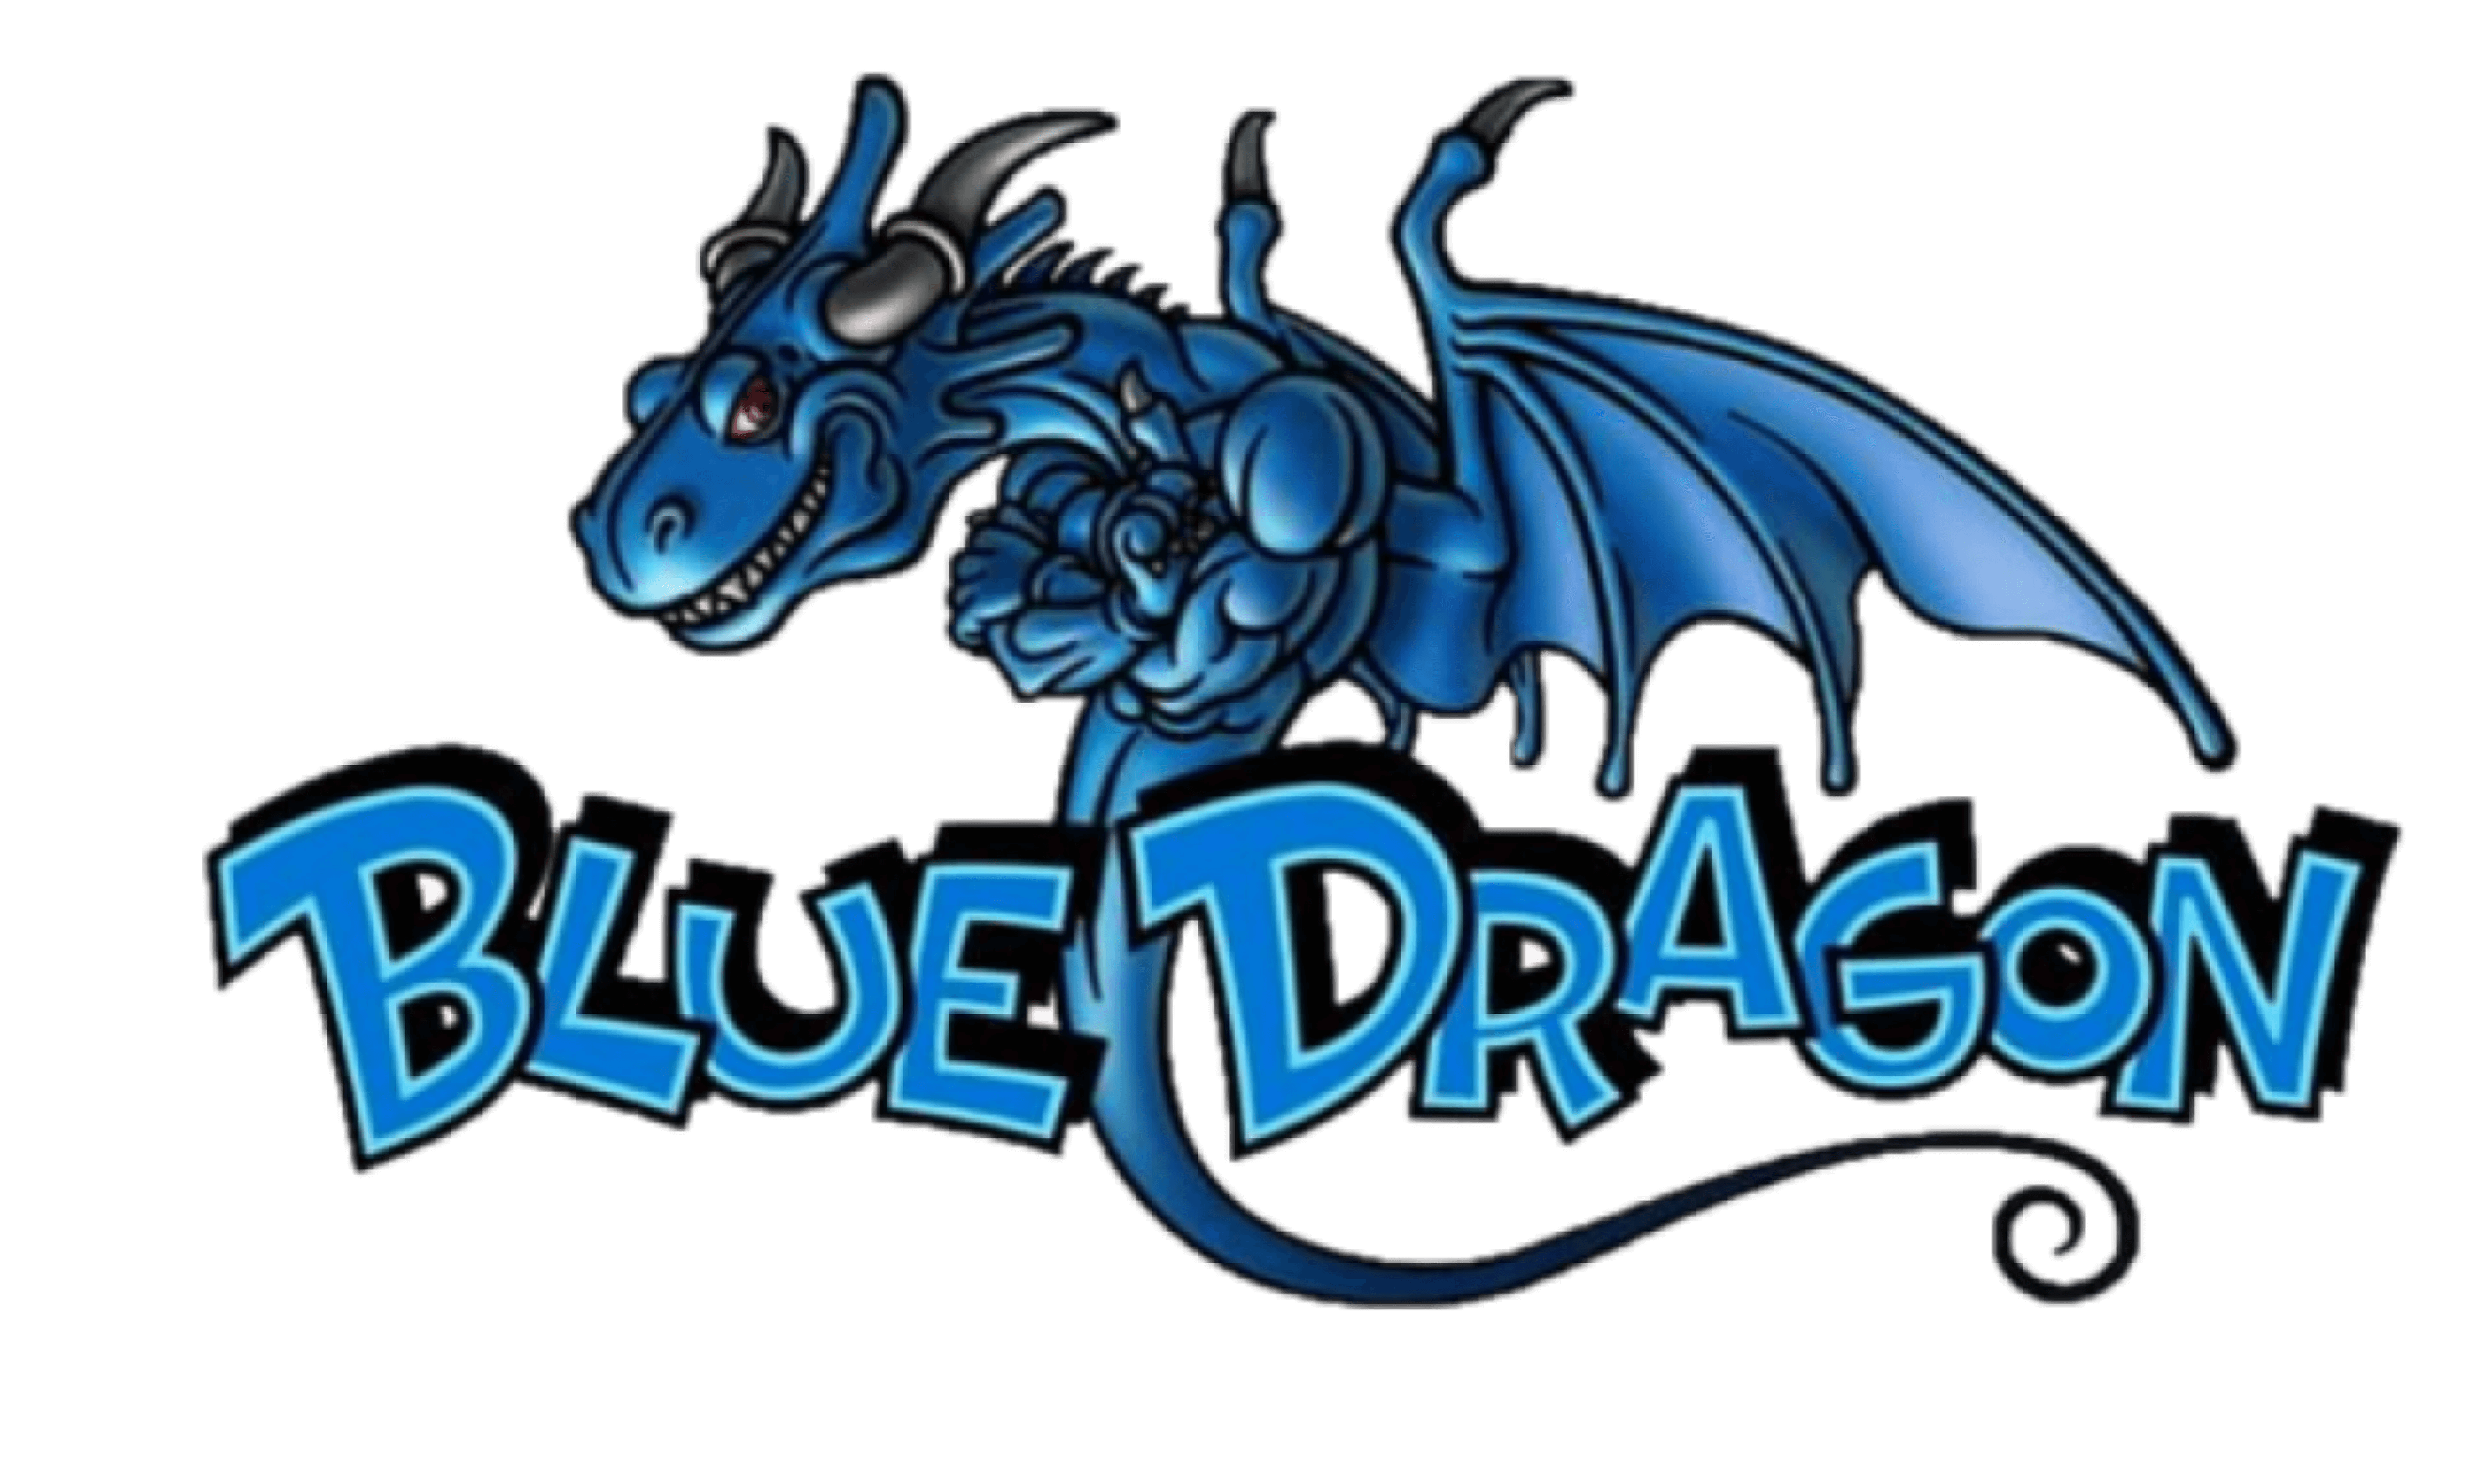 Blue Dragon ROM & ISO - XBOX 360 Game